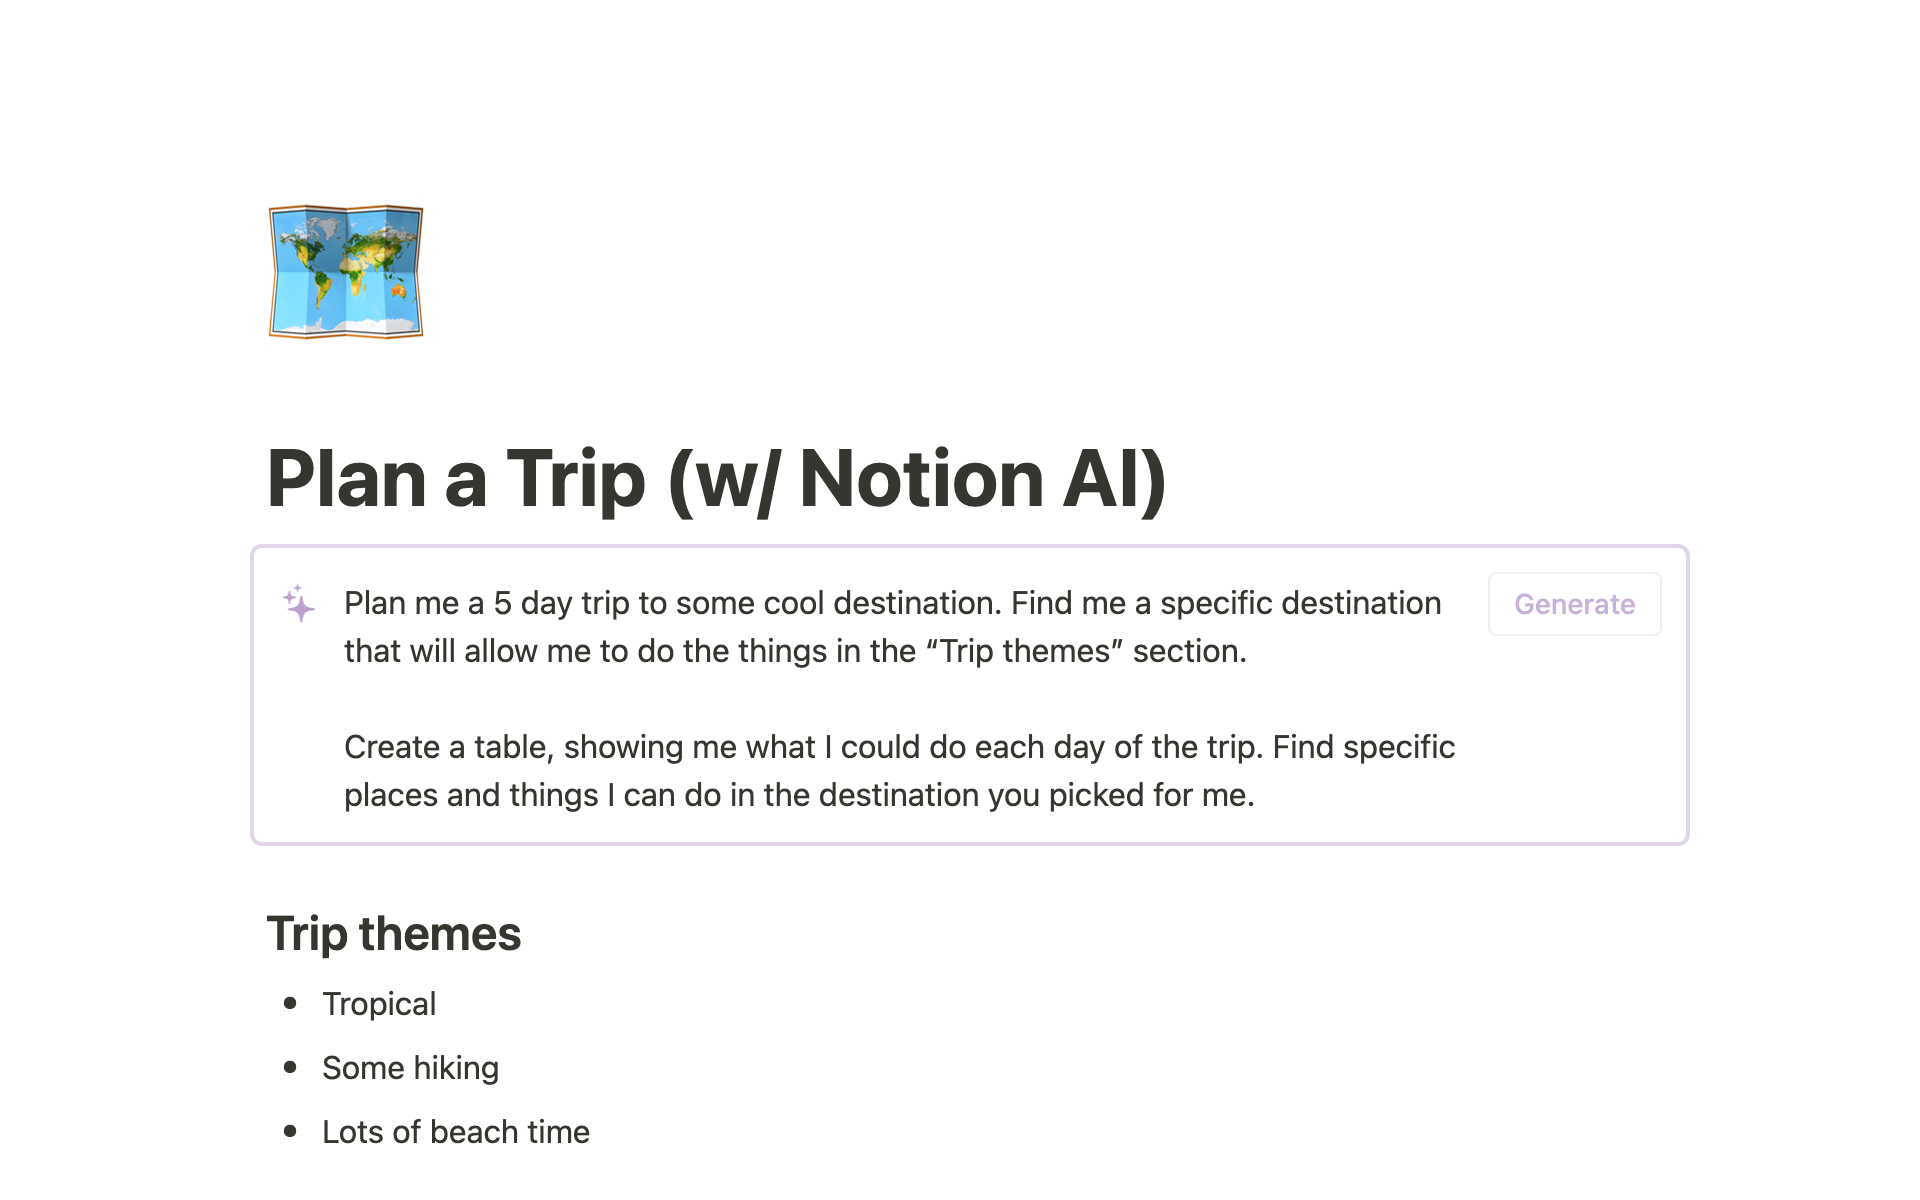 Notion AIで旅行計画のテンプレートのプレビュー